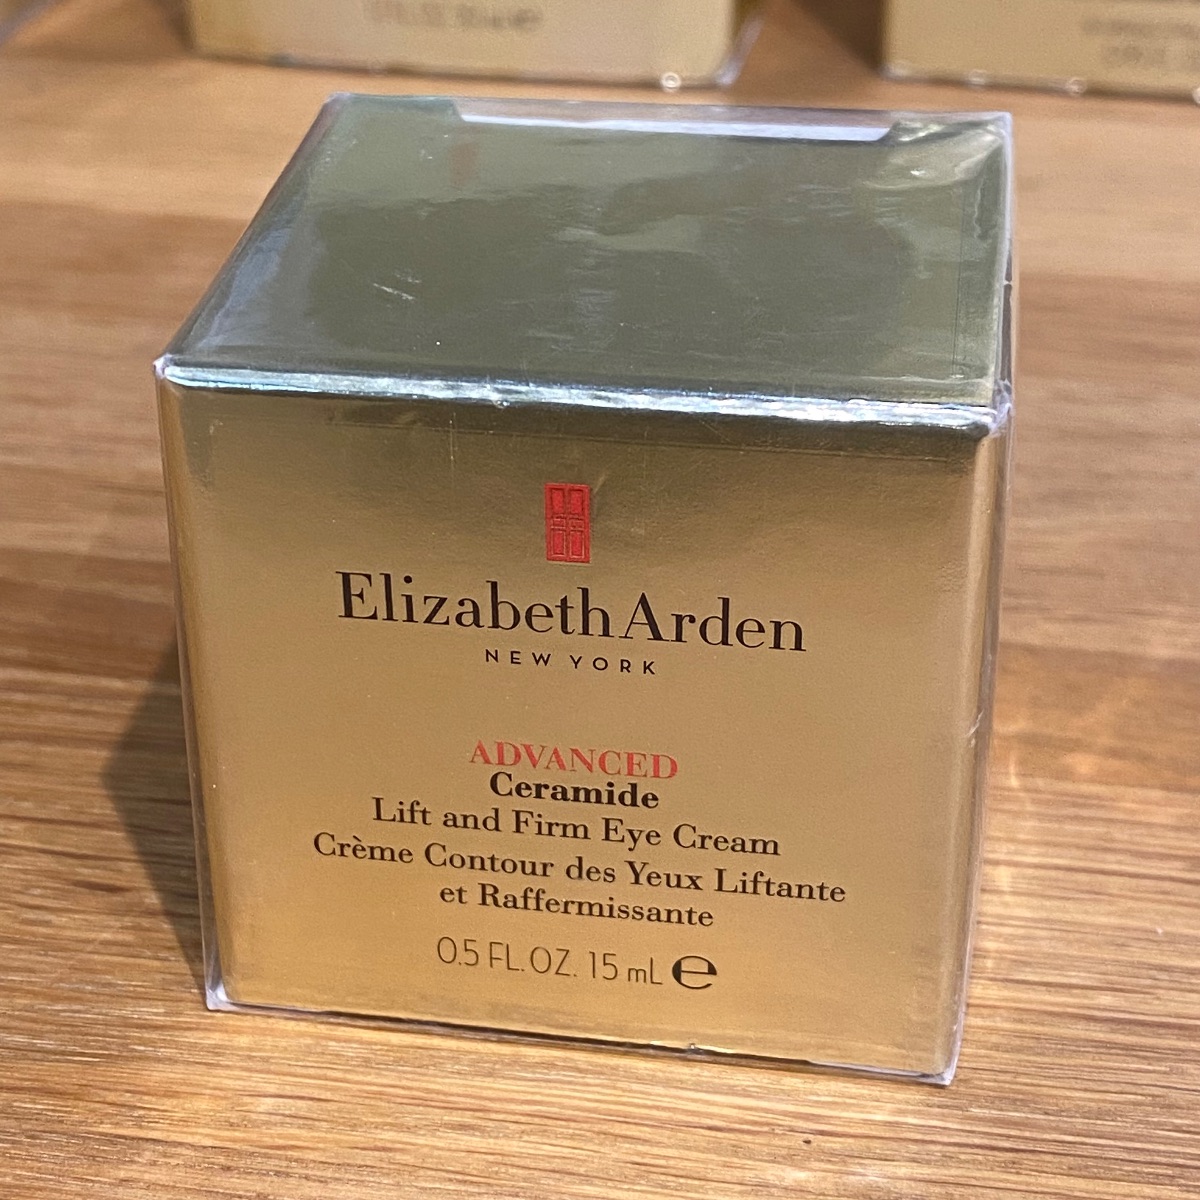 Elizabeth Arden Ceramide Advanced Lift and Firm Eye Cream 15ml Skincare EYE CREAM 85805410995 (Brand New)